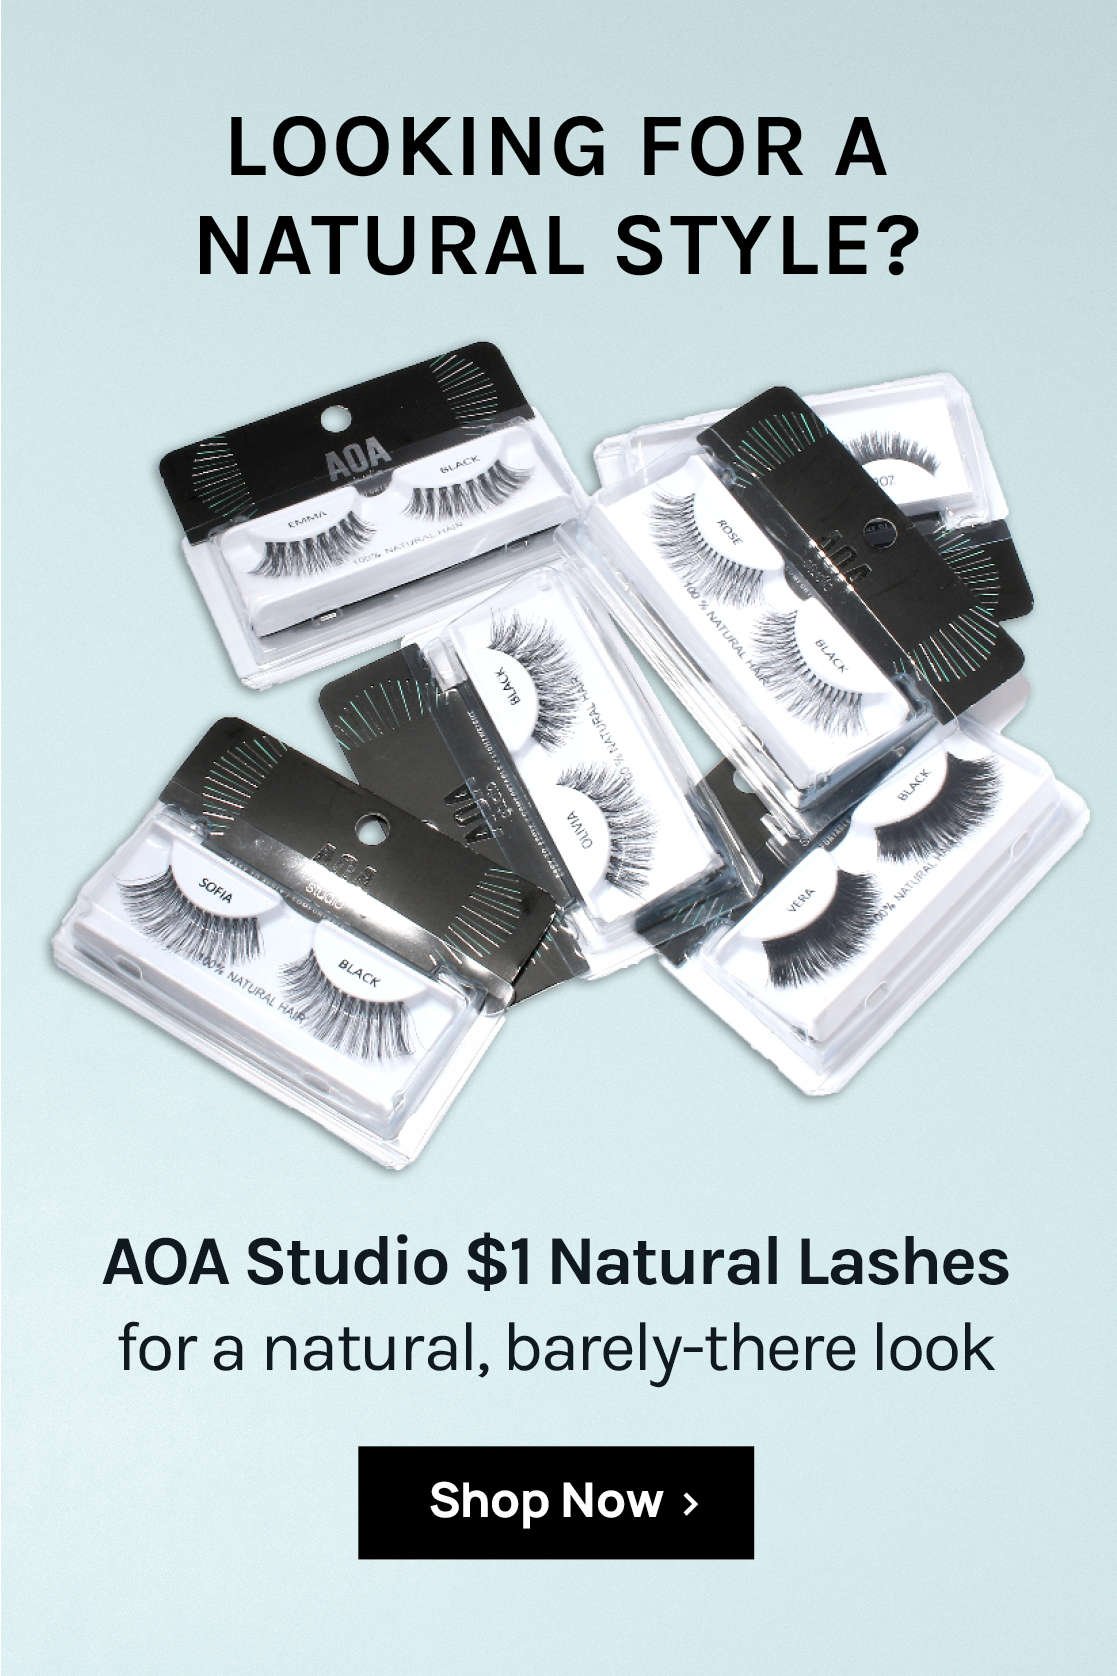 aoa studio $1 natural lashes